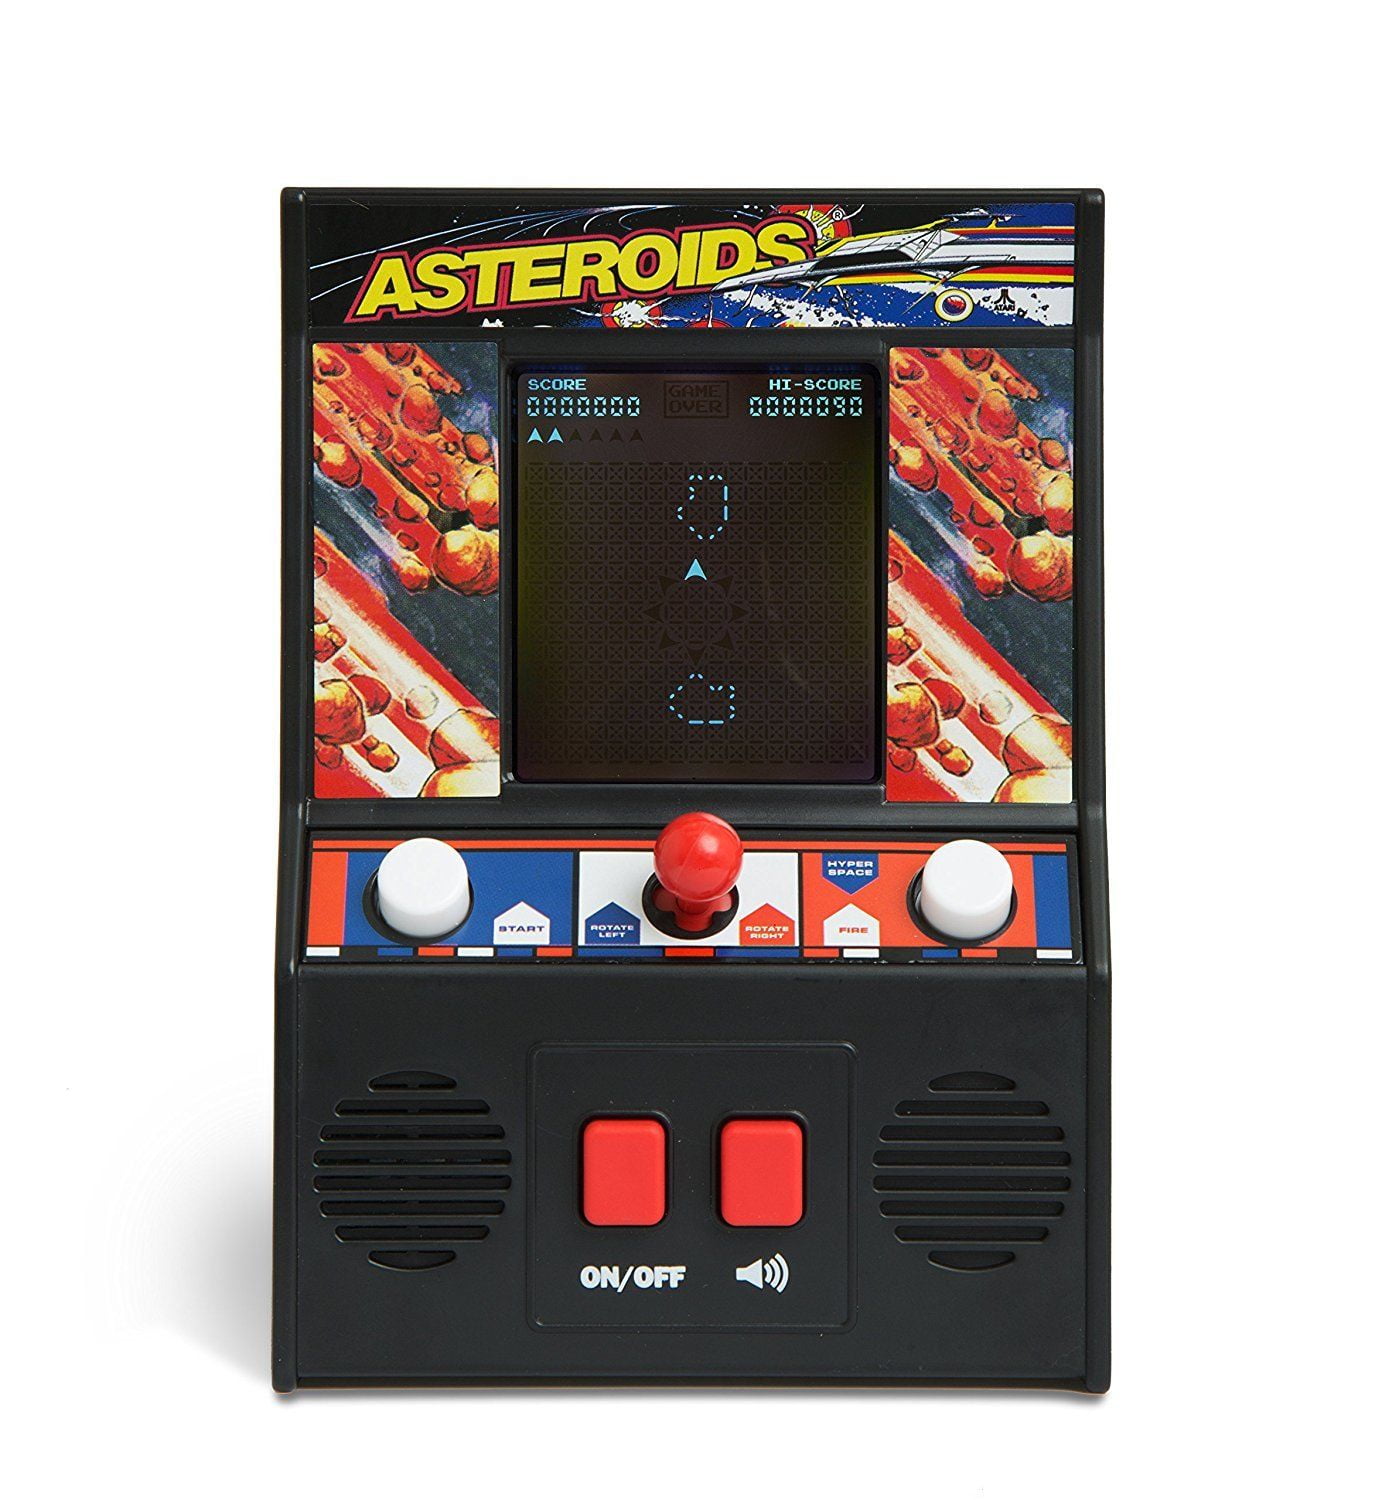 Atari Asteroids Arcade Classics Mini Arcade Game Retro-Styled BRAND NEW!! 